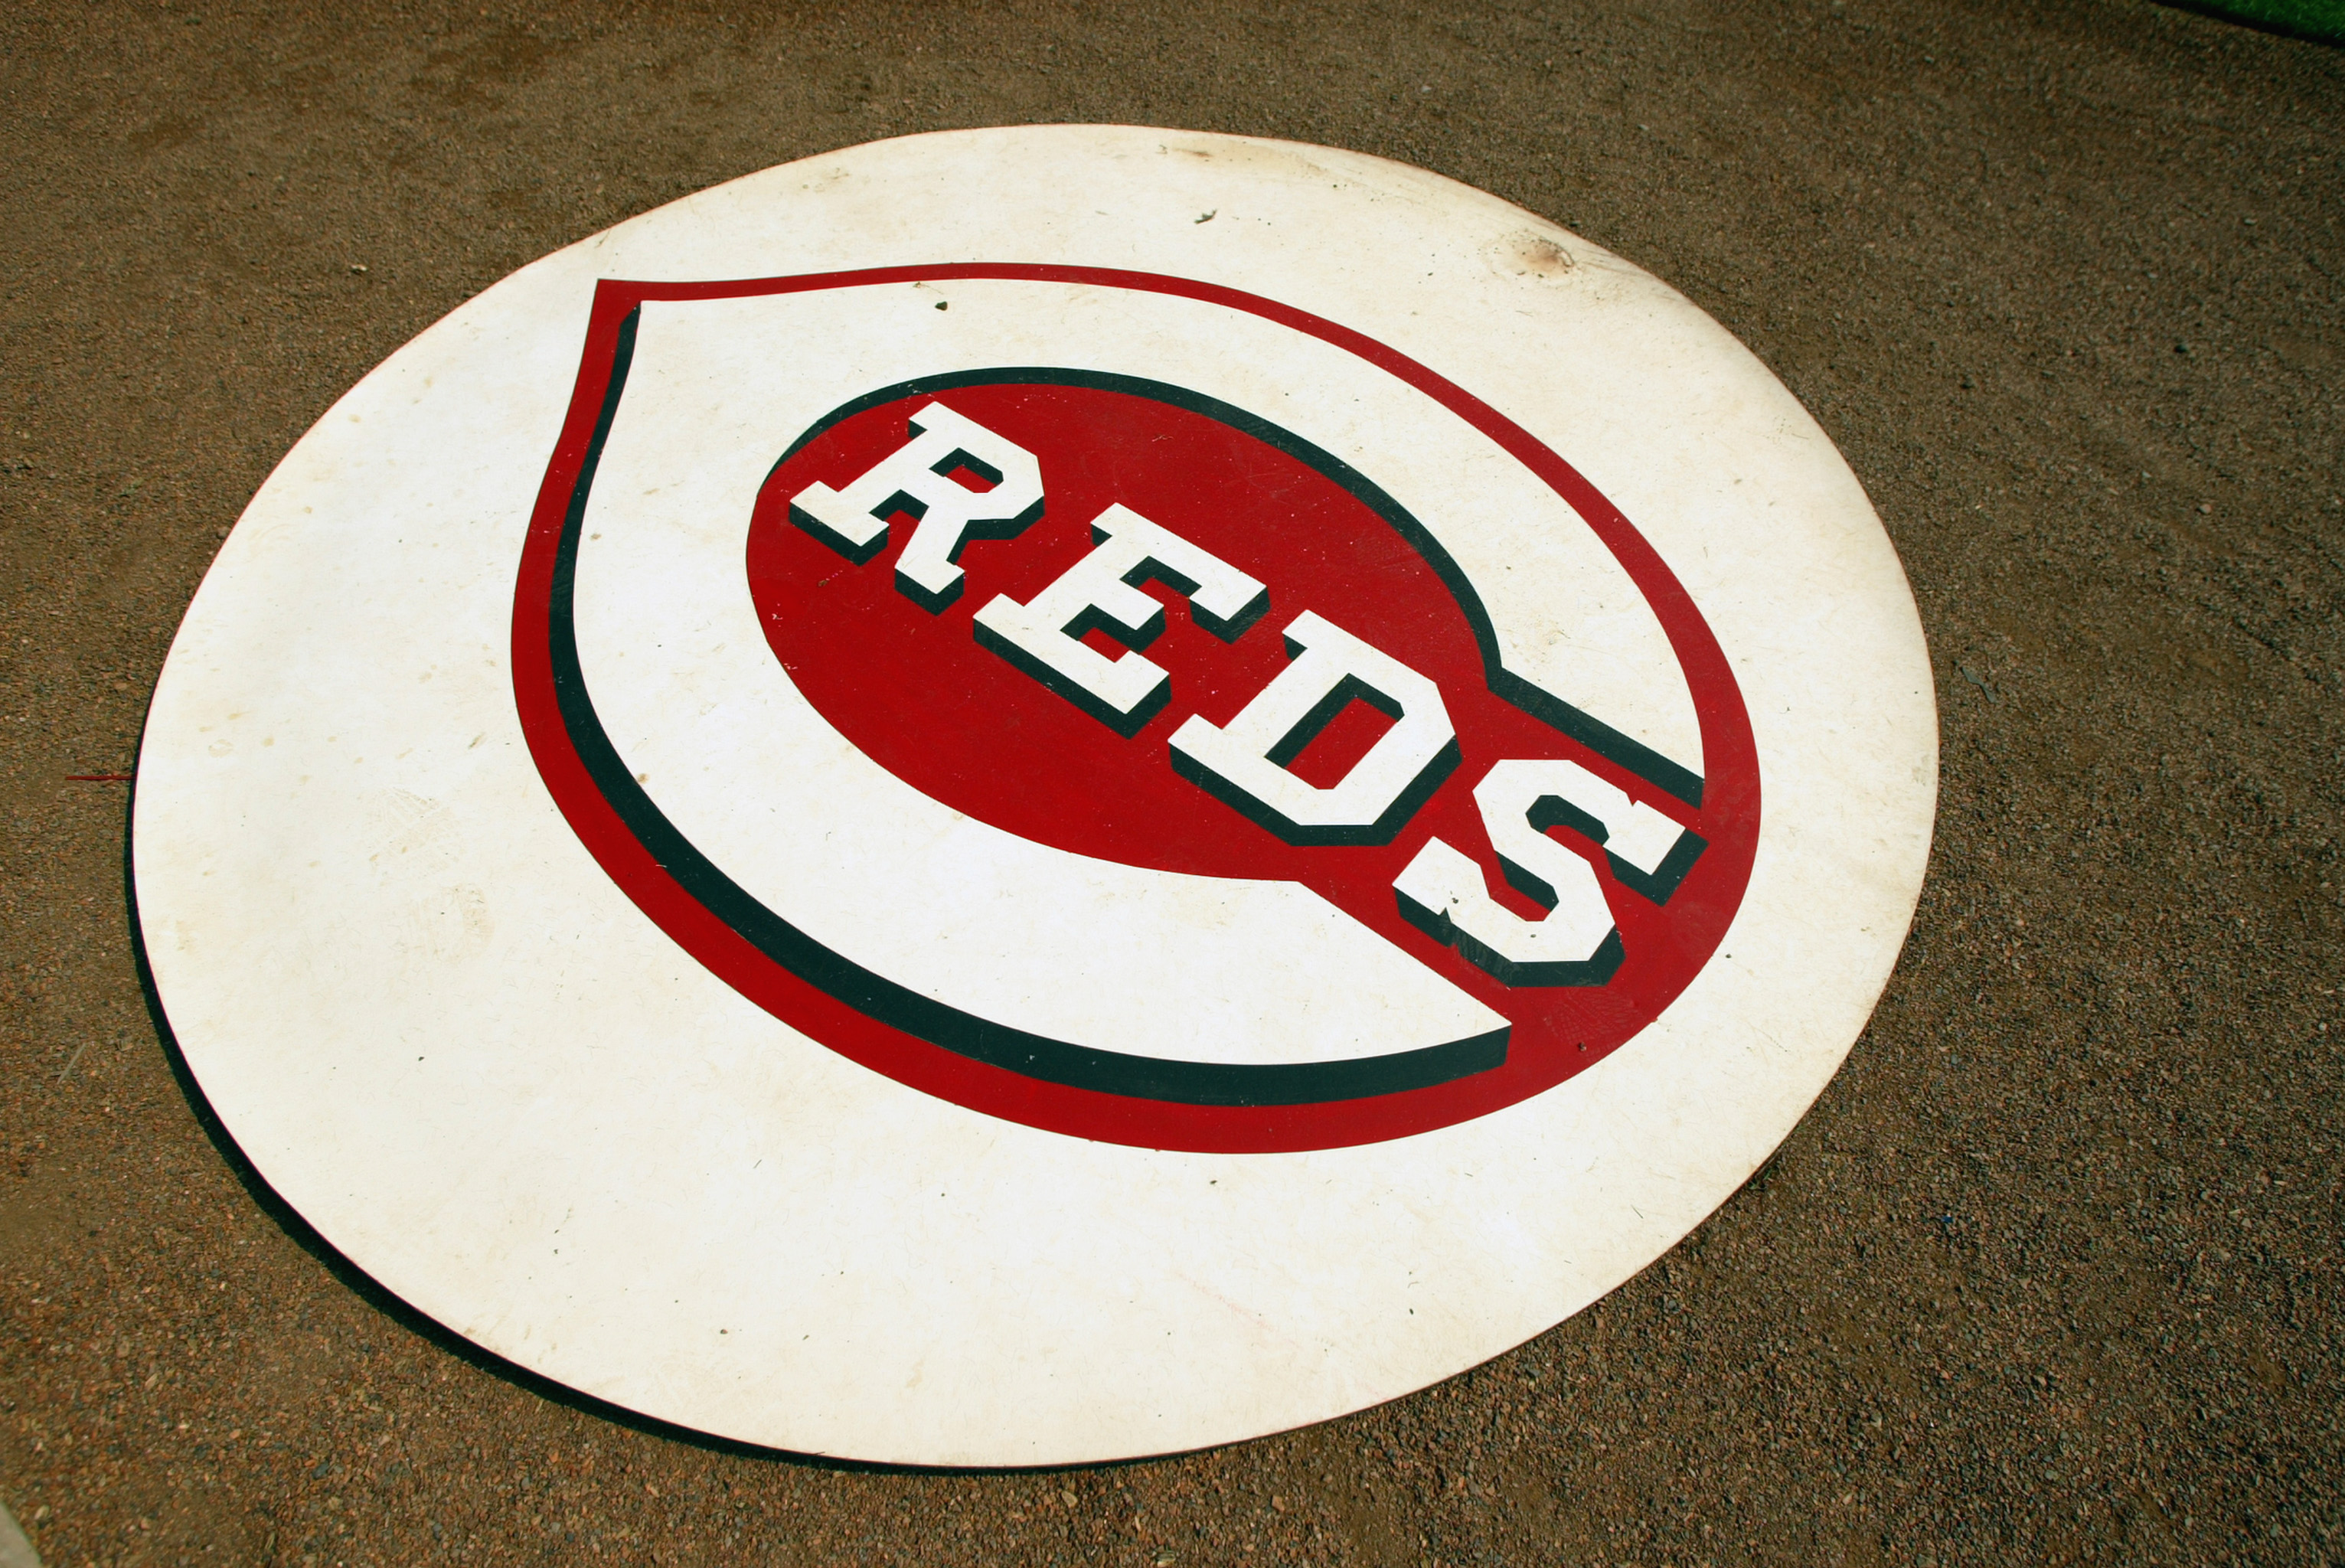 Detailed shot of the Cincinnati Reds logo